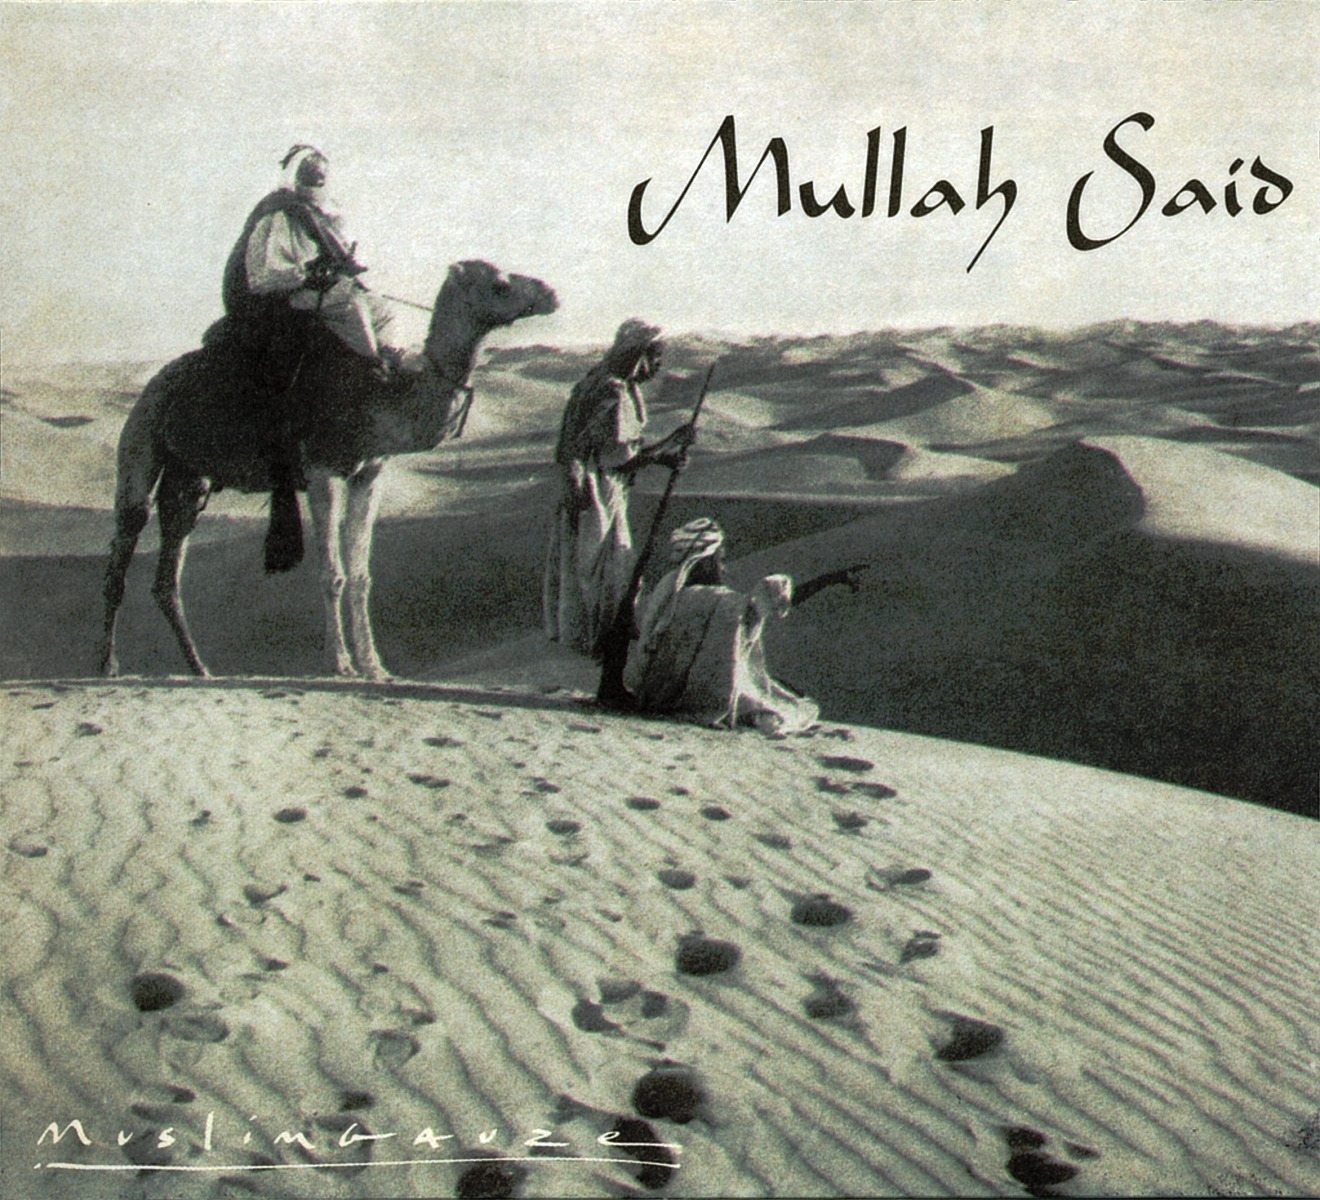 Muslimgauze - Mullah Said (ambient-dub)